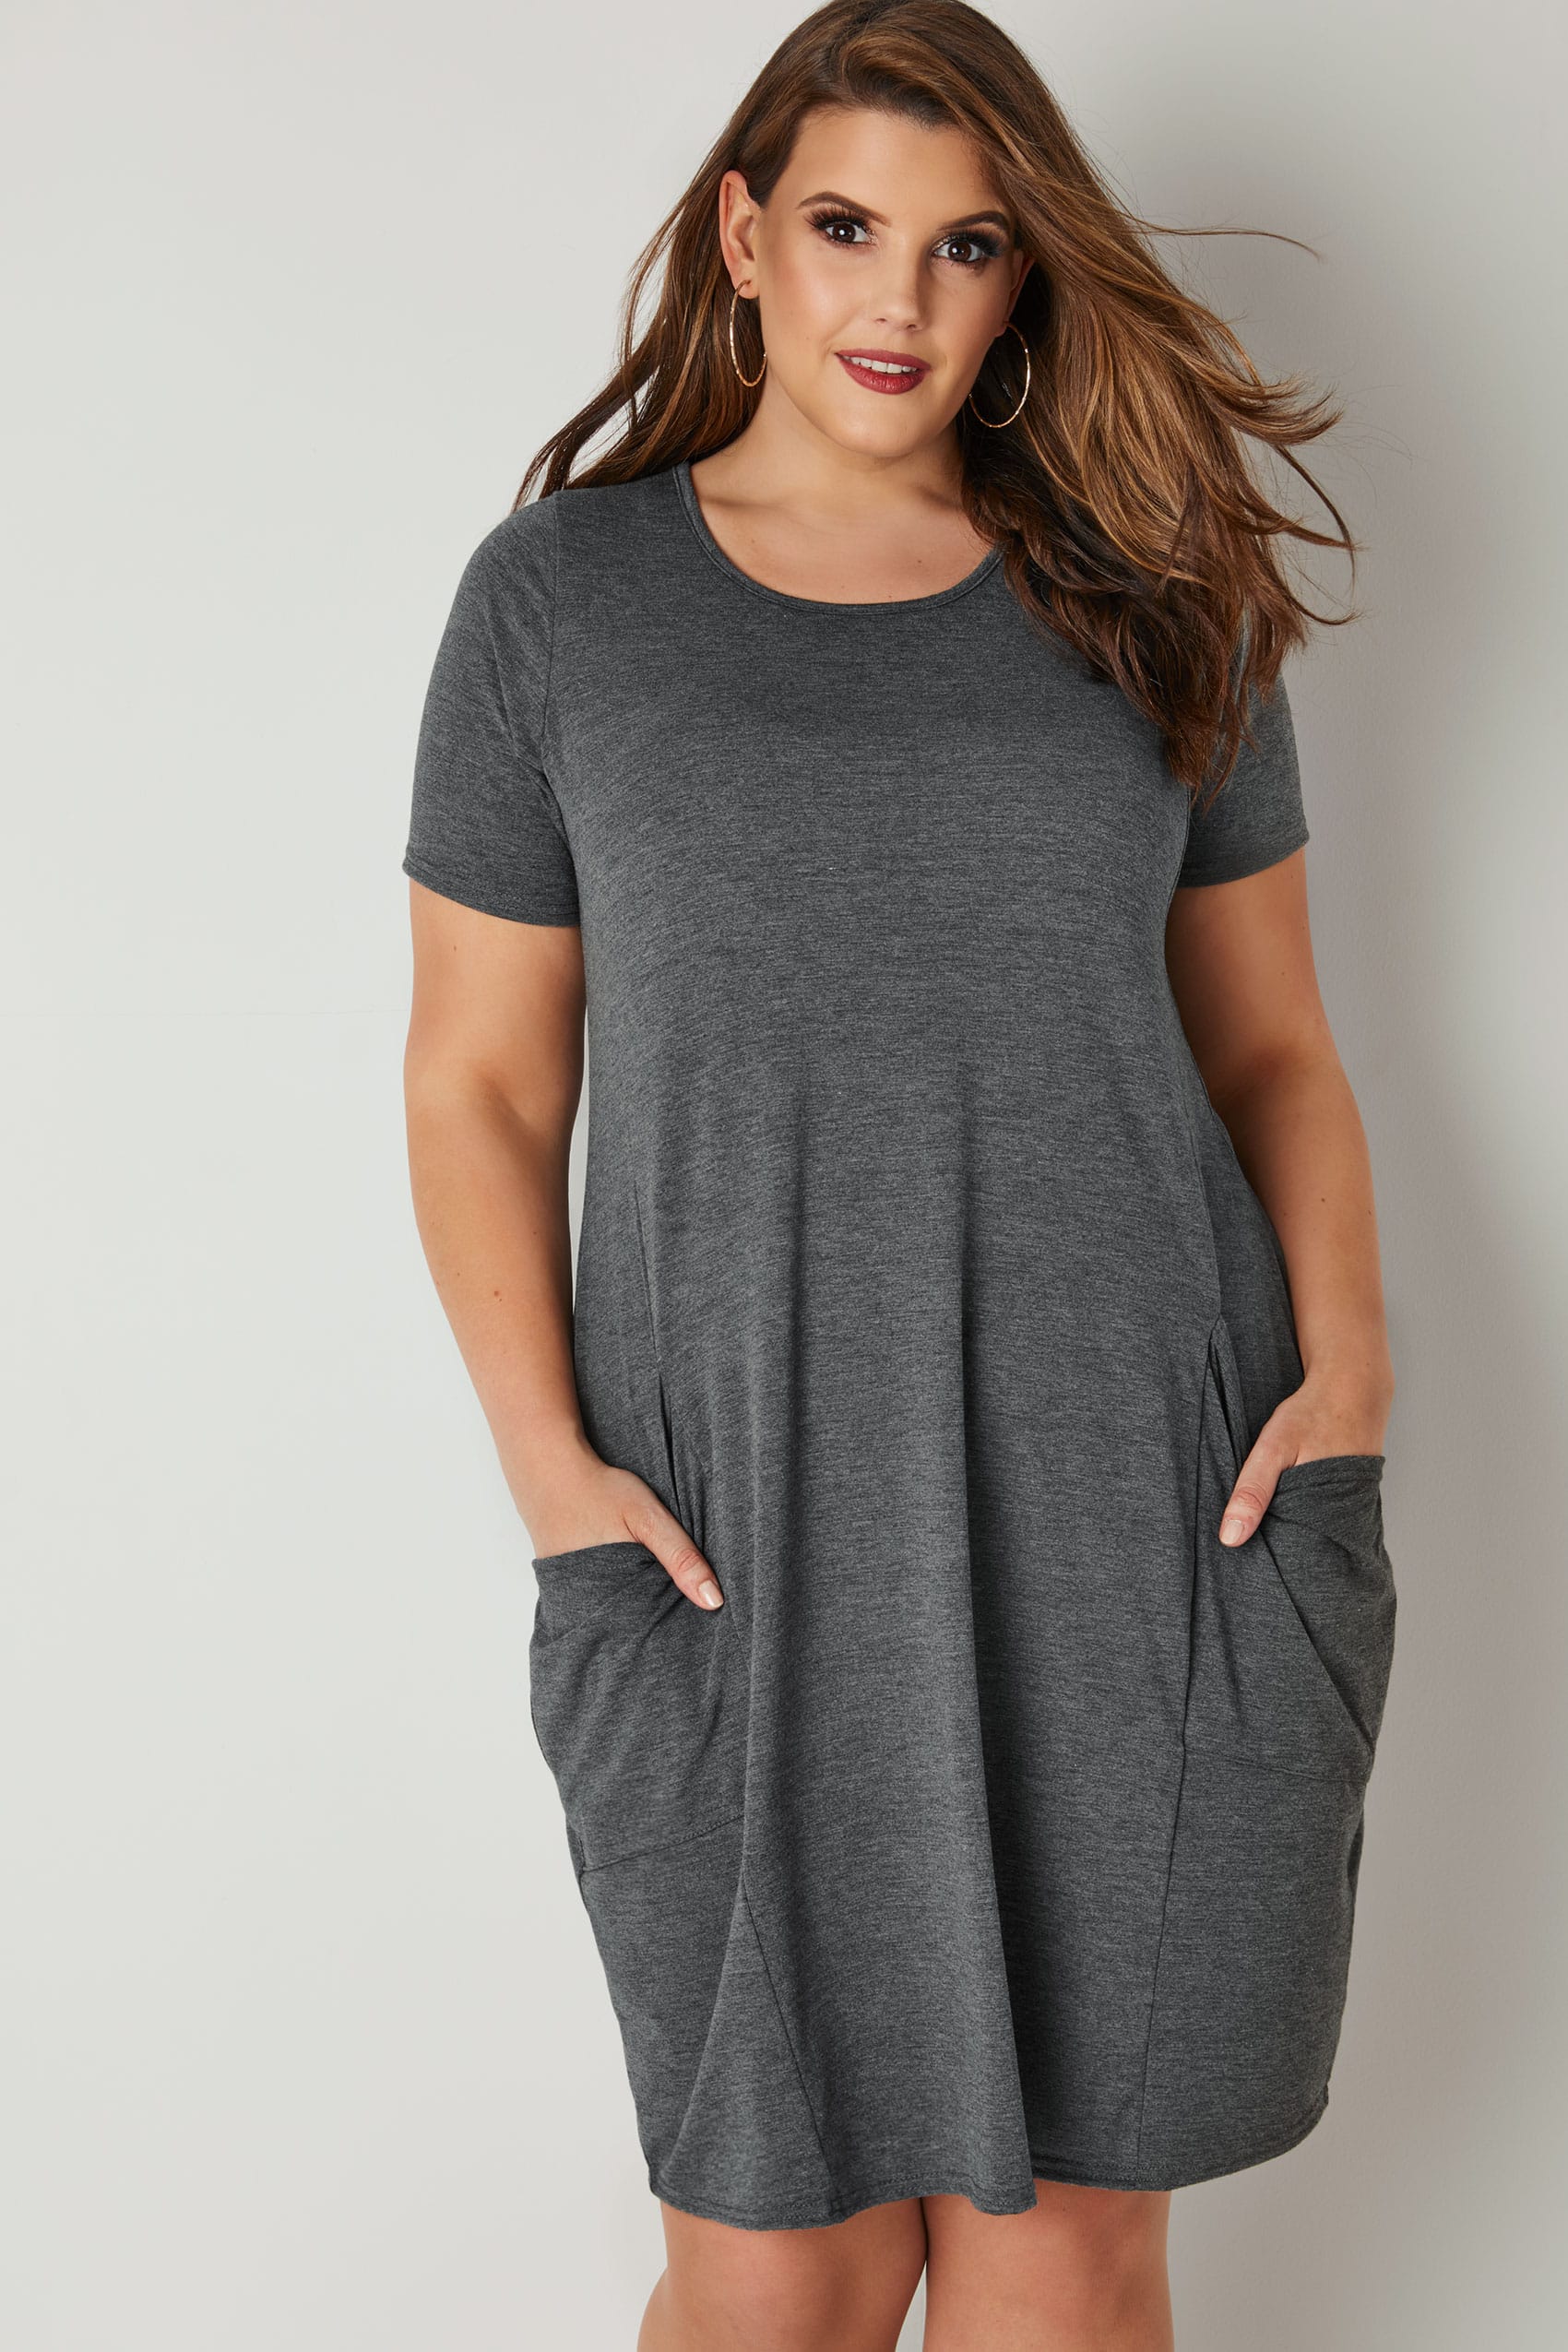 Grey Draped Pocket Jersey Dress, plus size 16 to 36